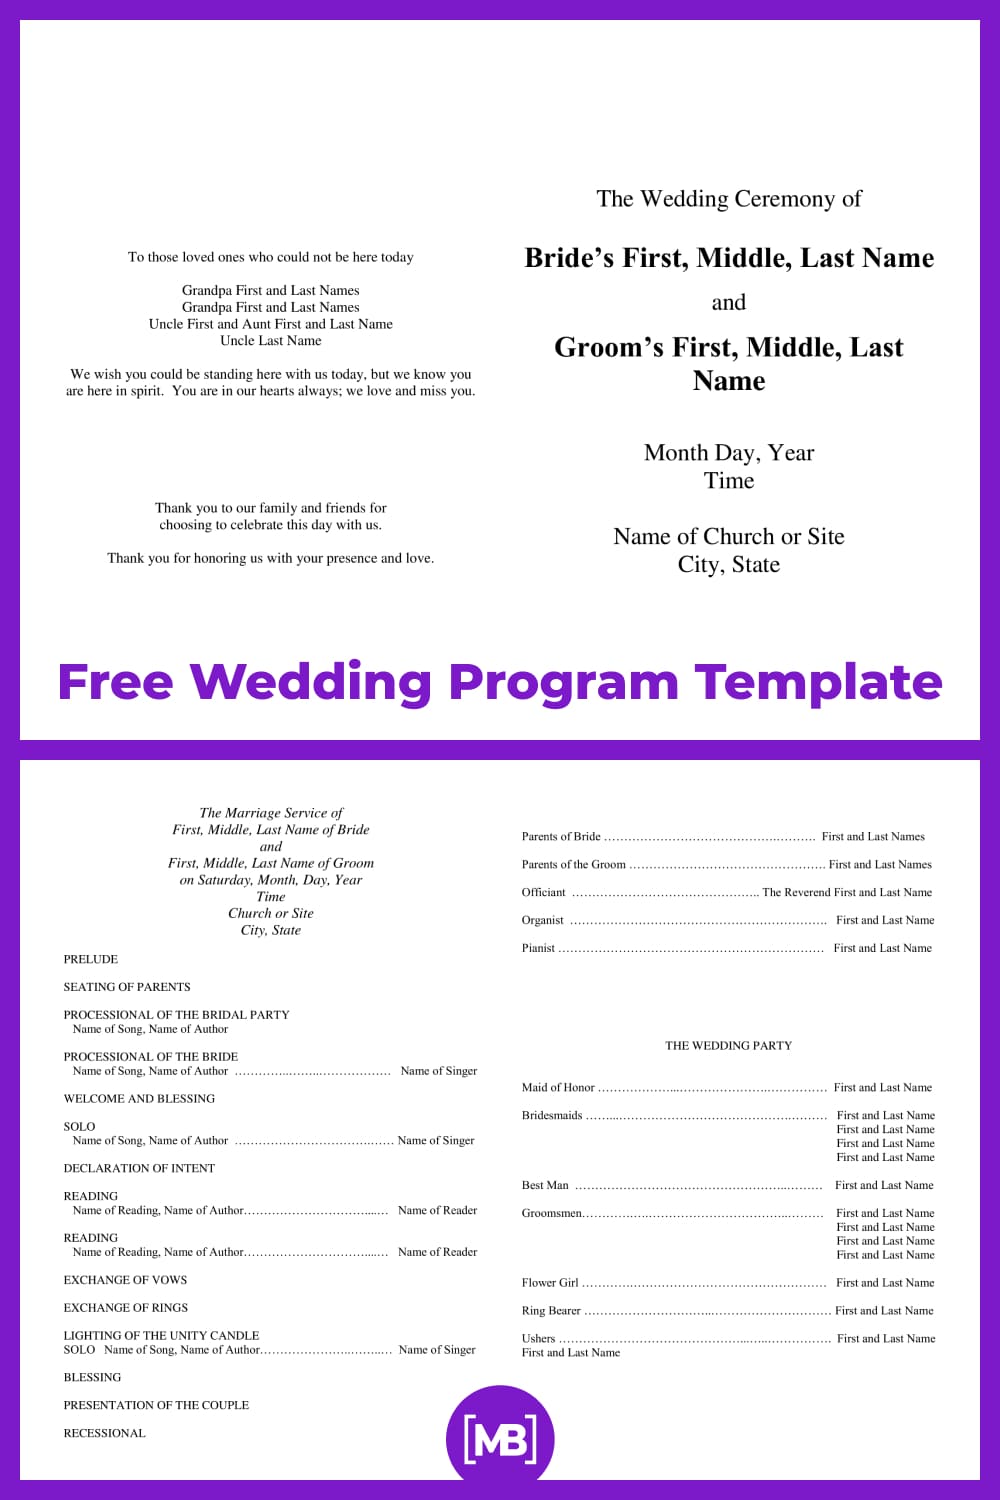 Wedding program template.